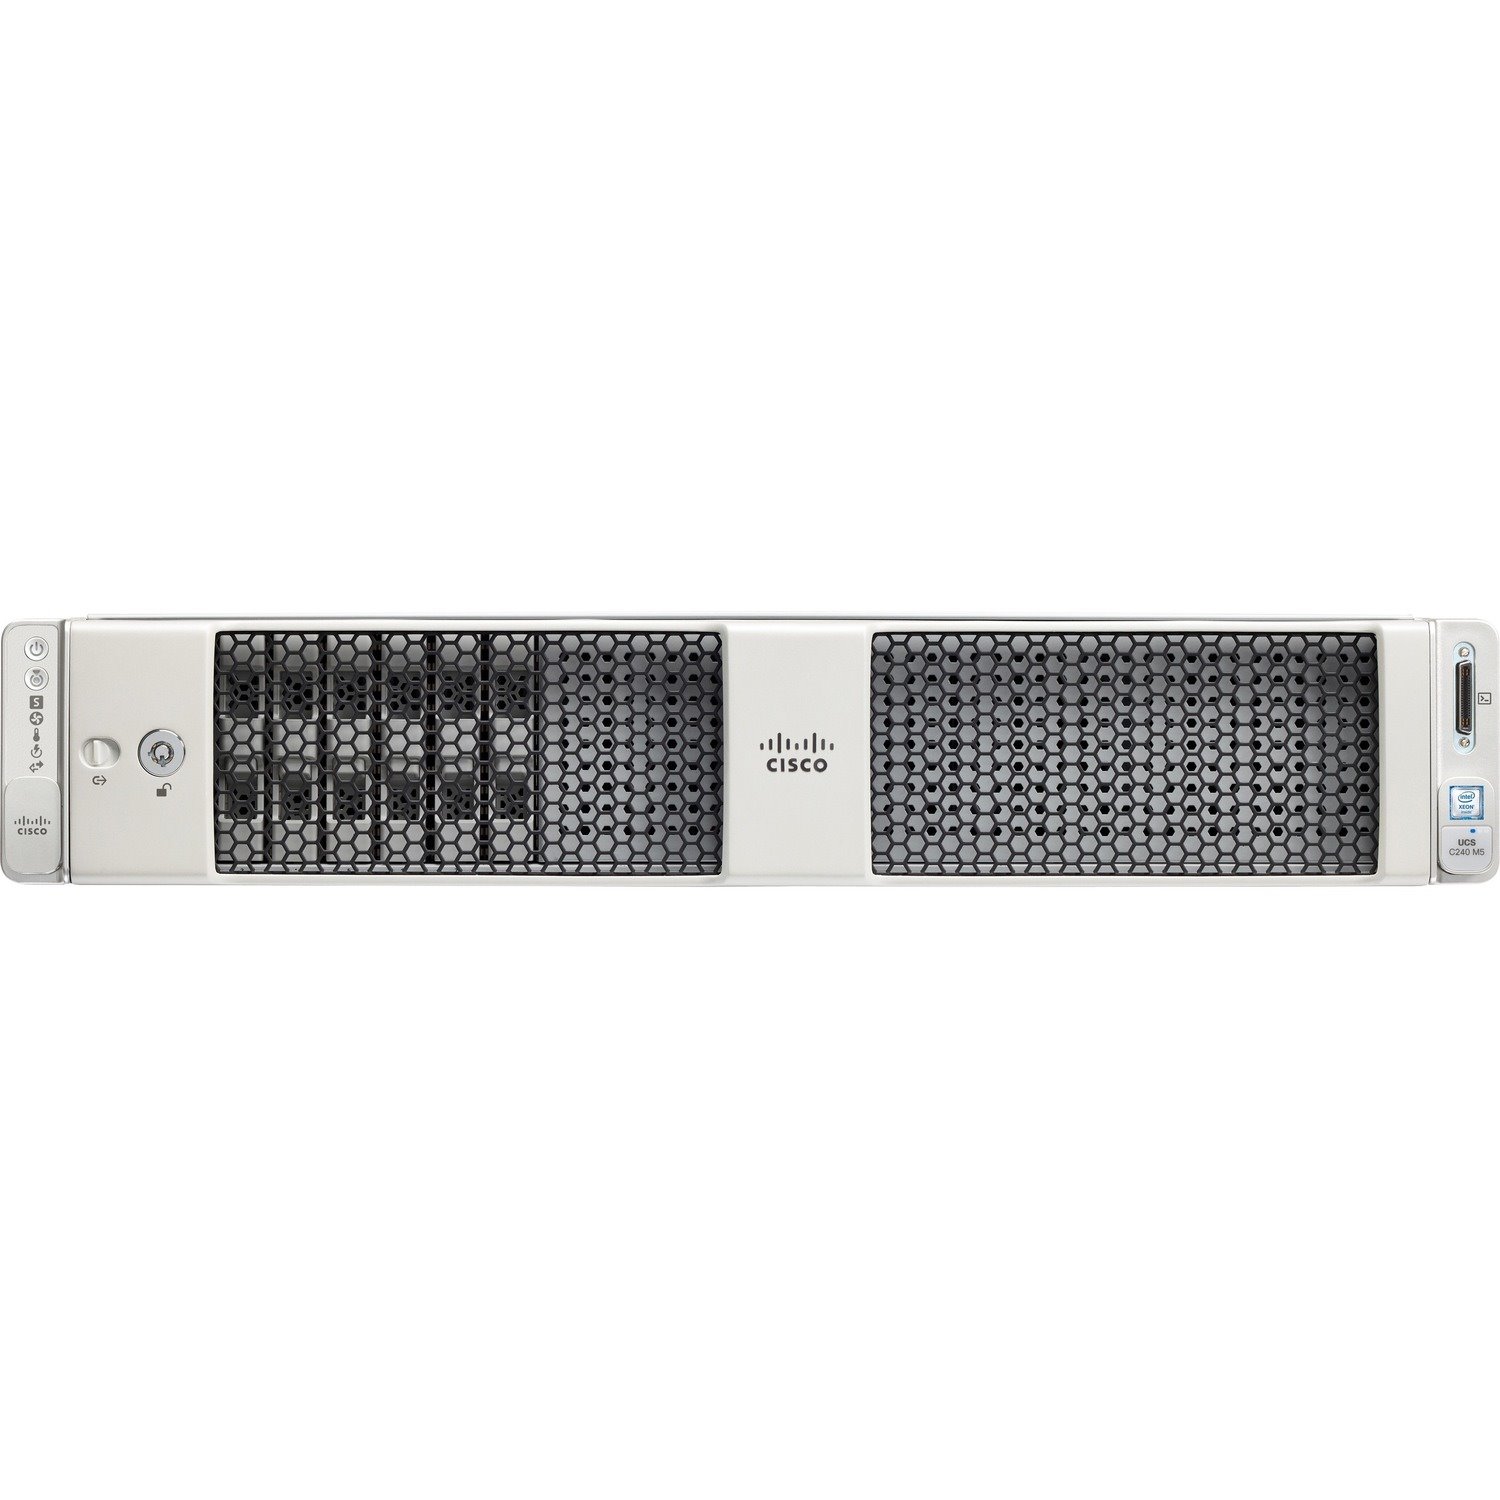 Cisco C240 M5 2U Rack-mountable Server - 2 x Intel Xeon Gold 5122 3.60 GHz - 384 GB RAM - 12Gb/s SAS Controller